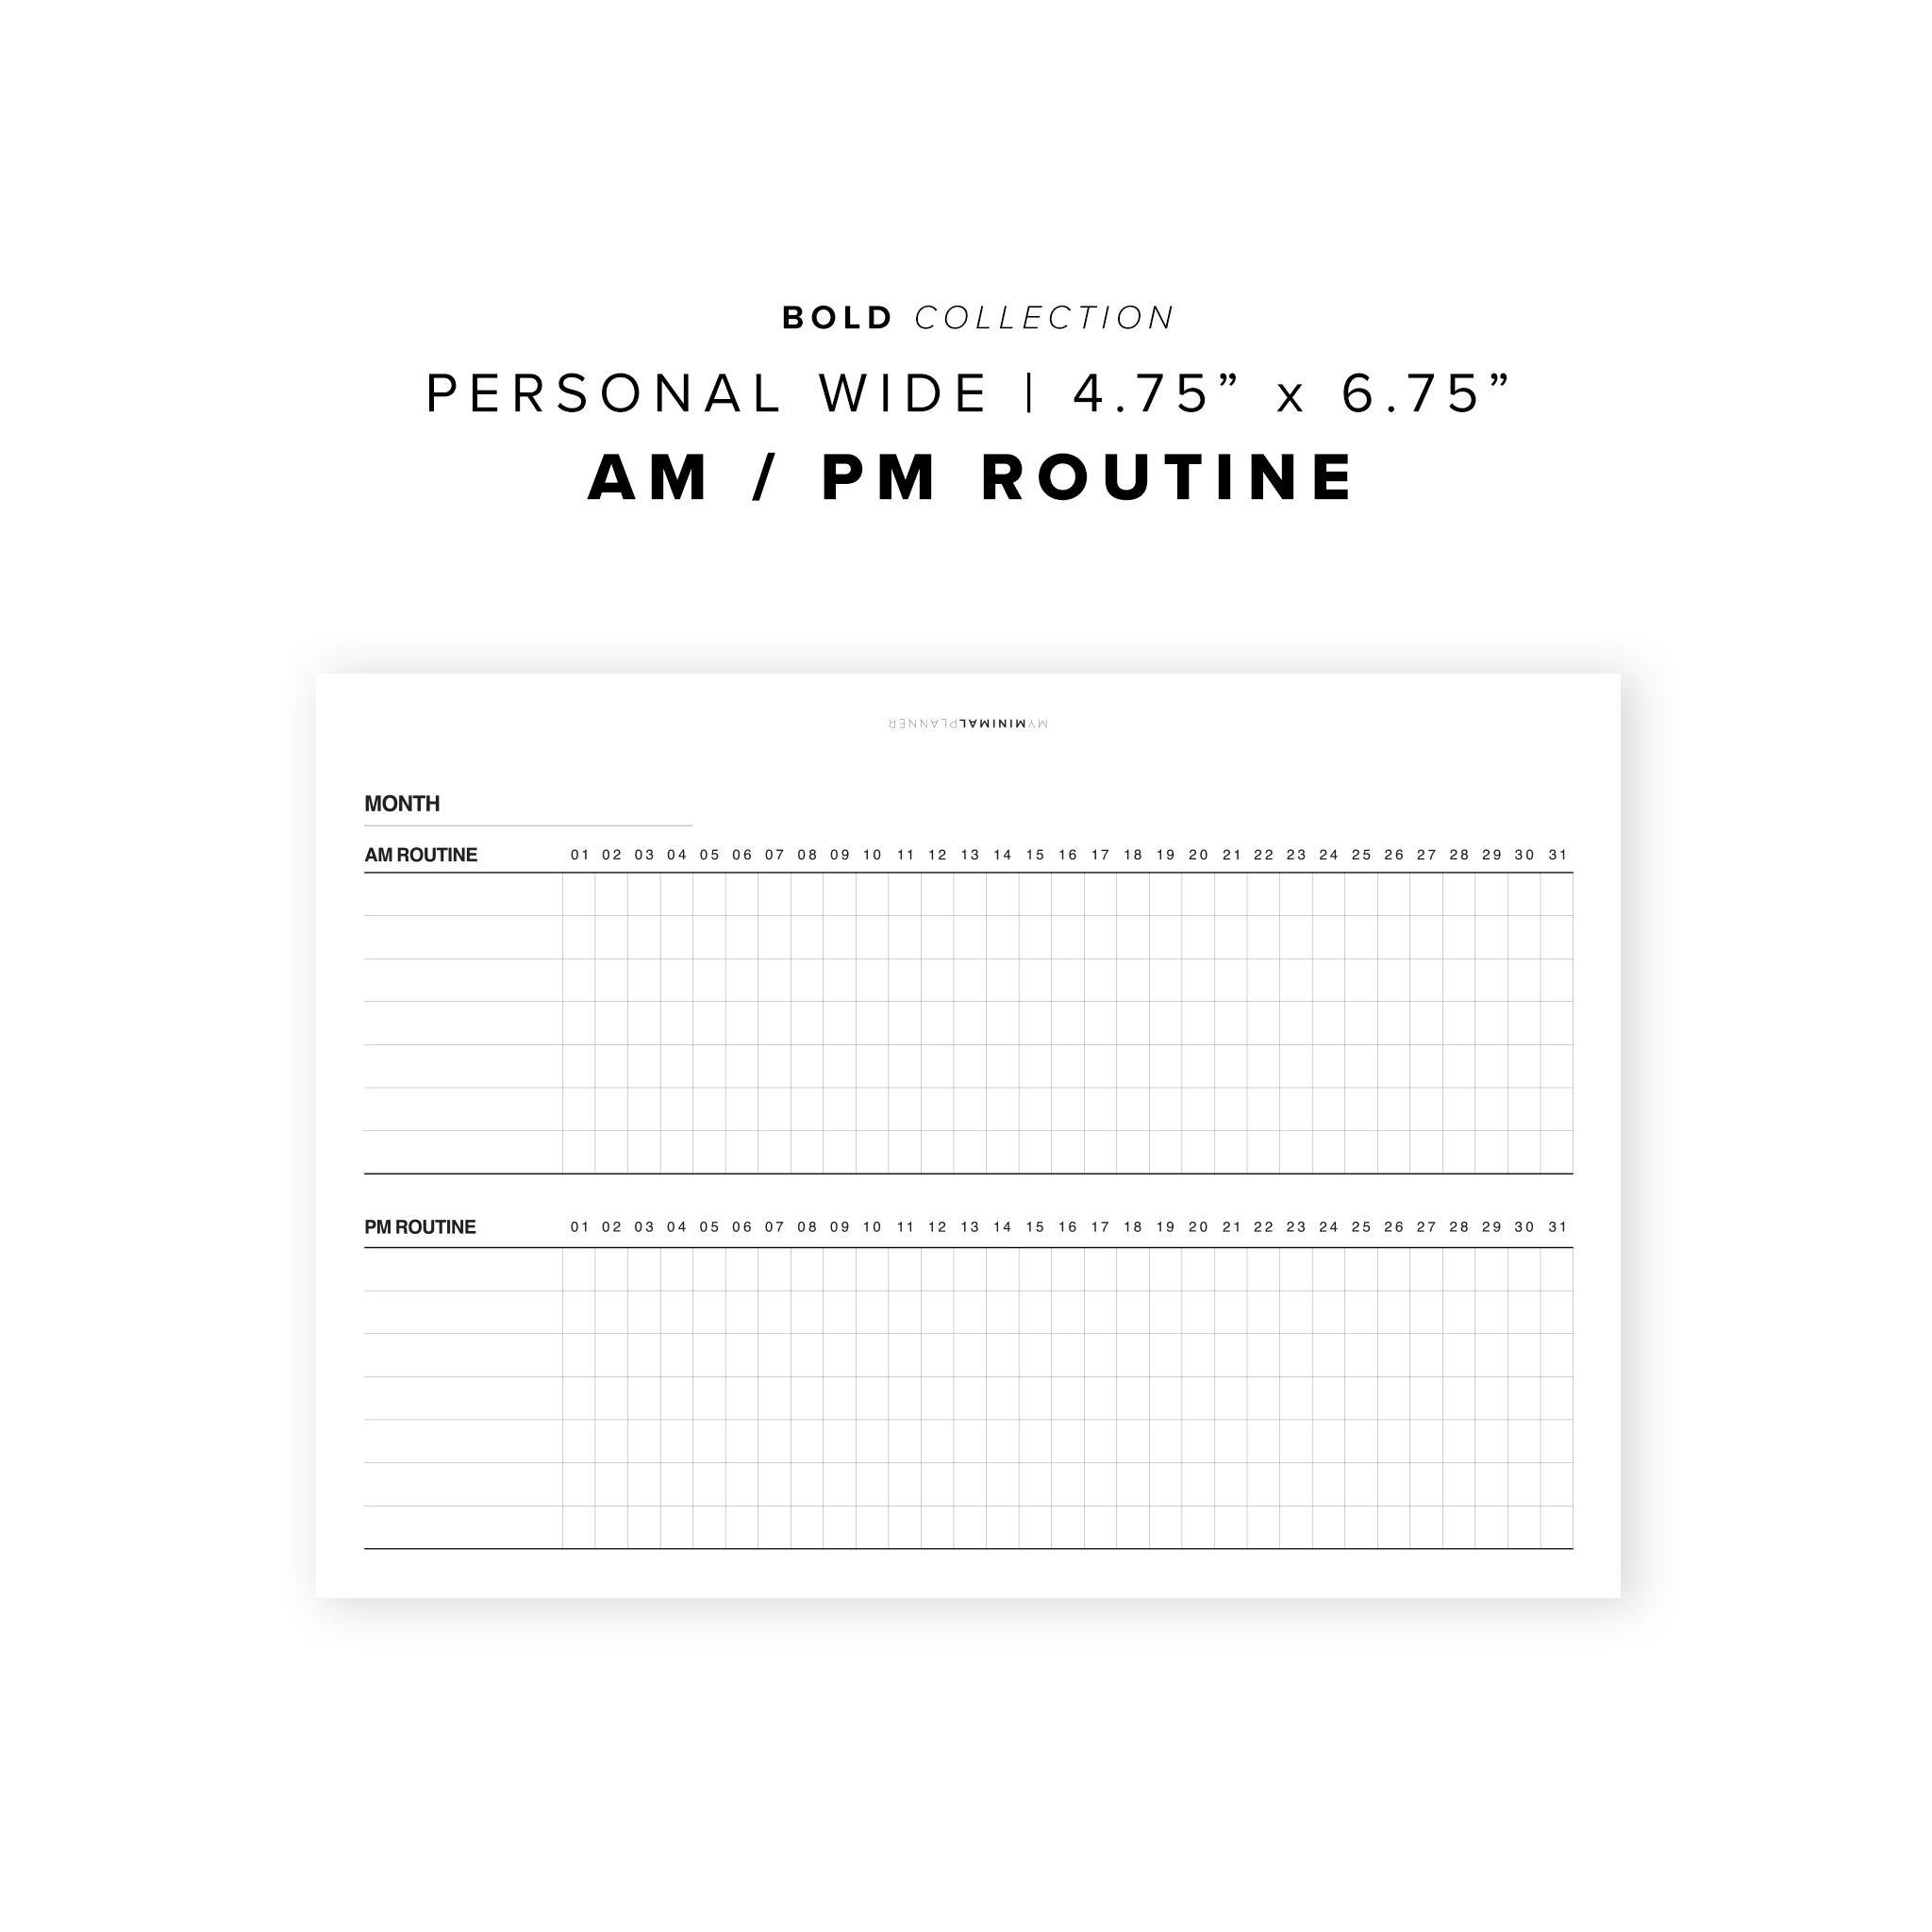 PR27 - 24 Hour Daily Agenda - Printable Insert – My Minimal Planner